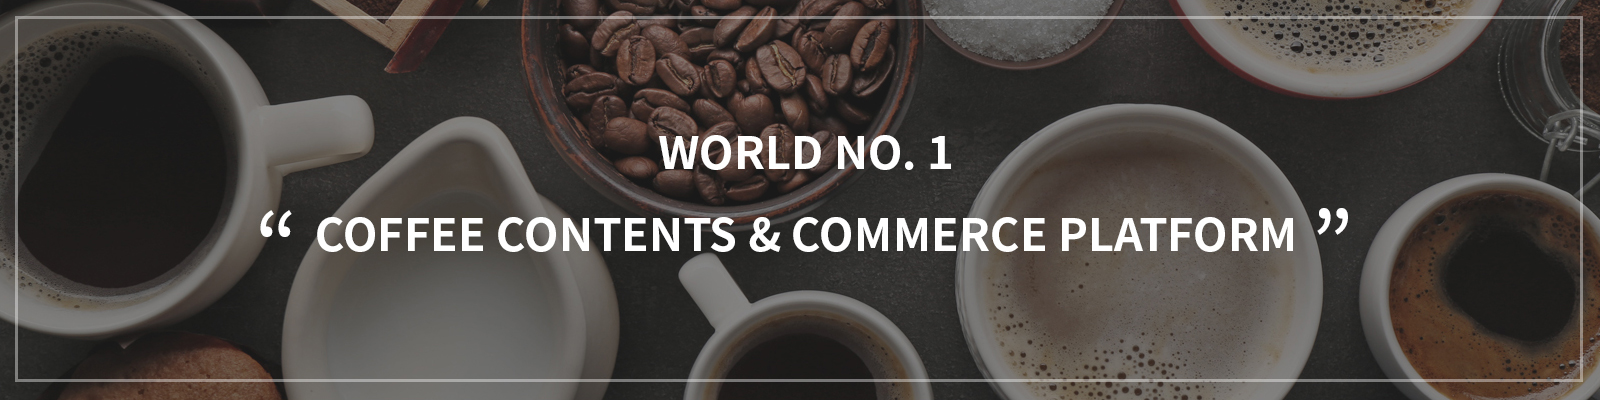 World No. 1 Coffee Contents & Commerce Platform